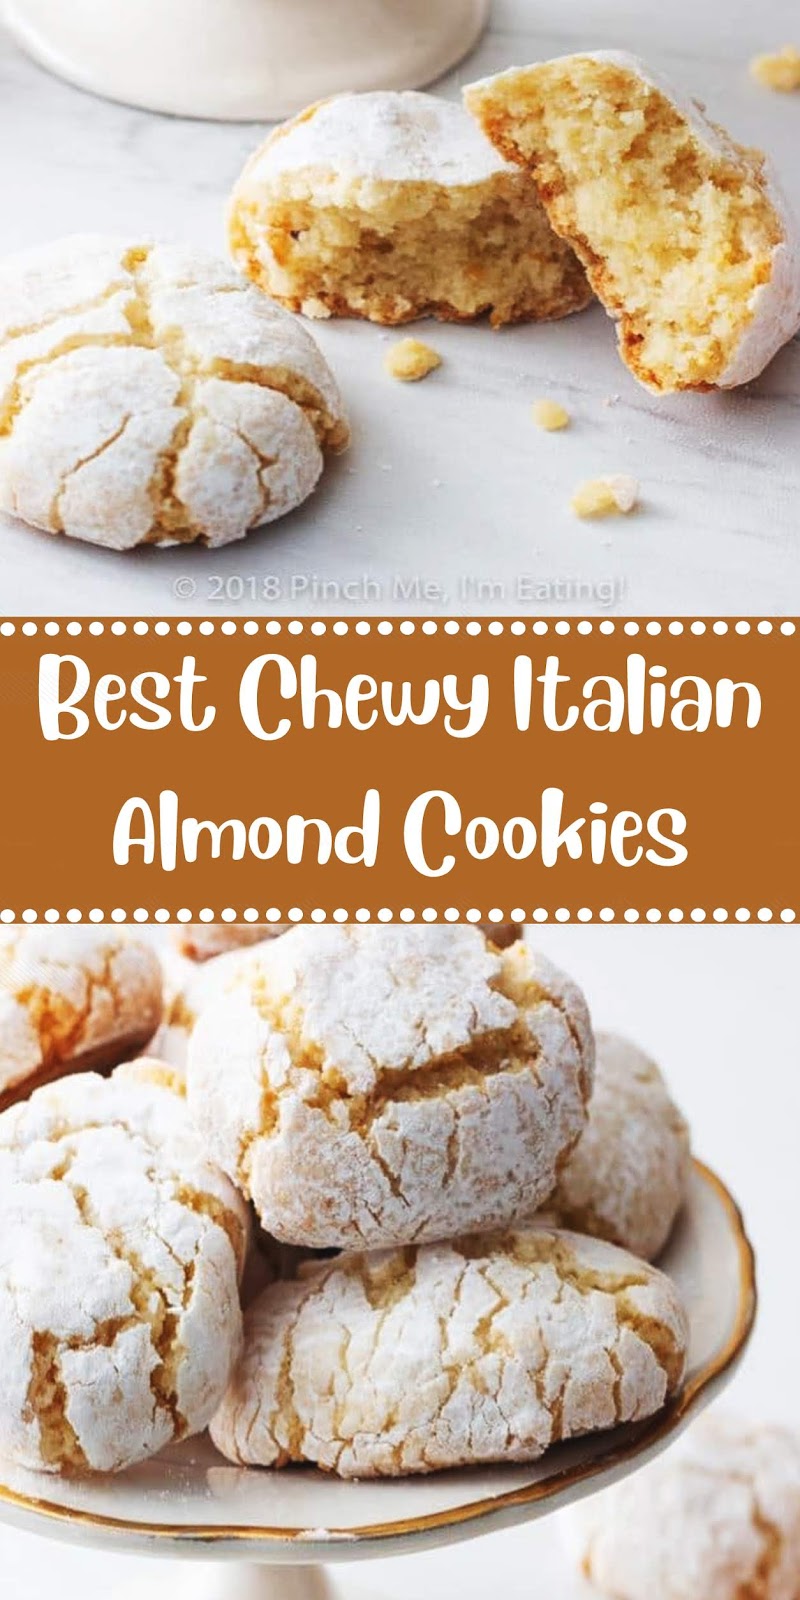 Best Chewy Italian Almond Cookies - Recipe Kuenak